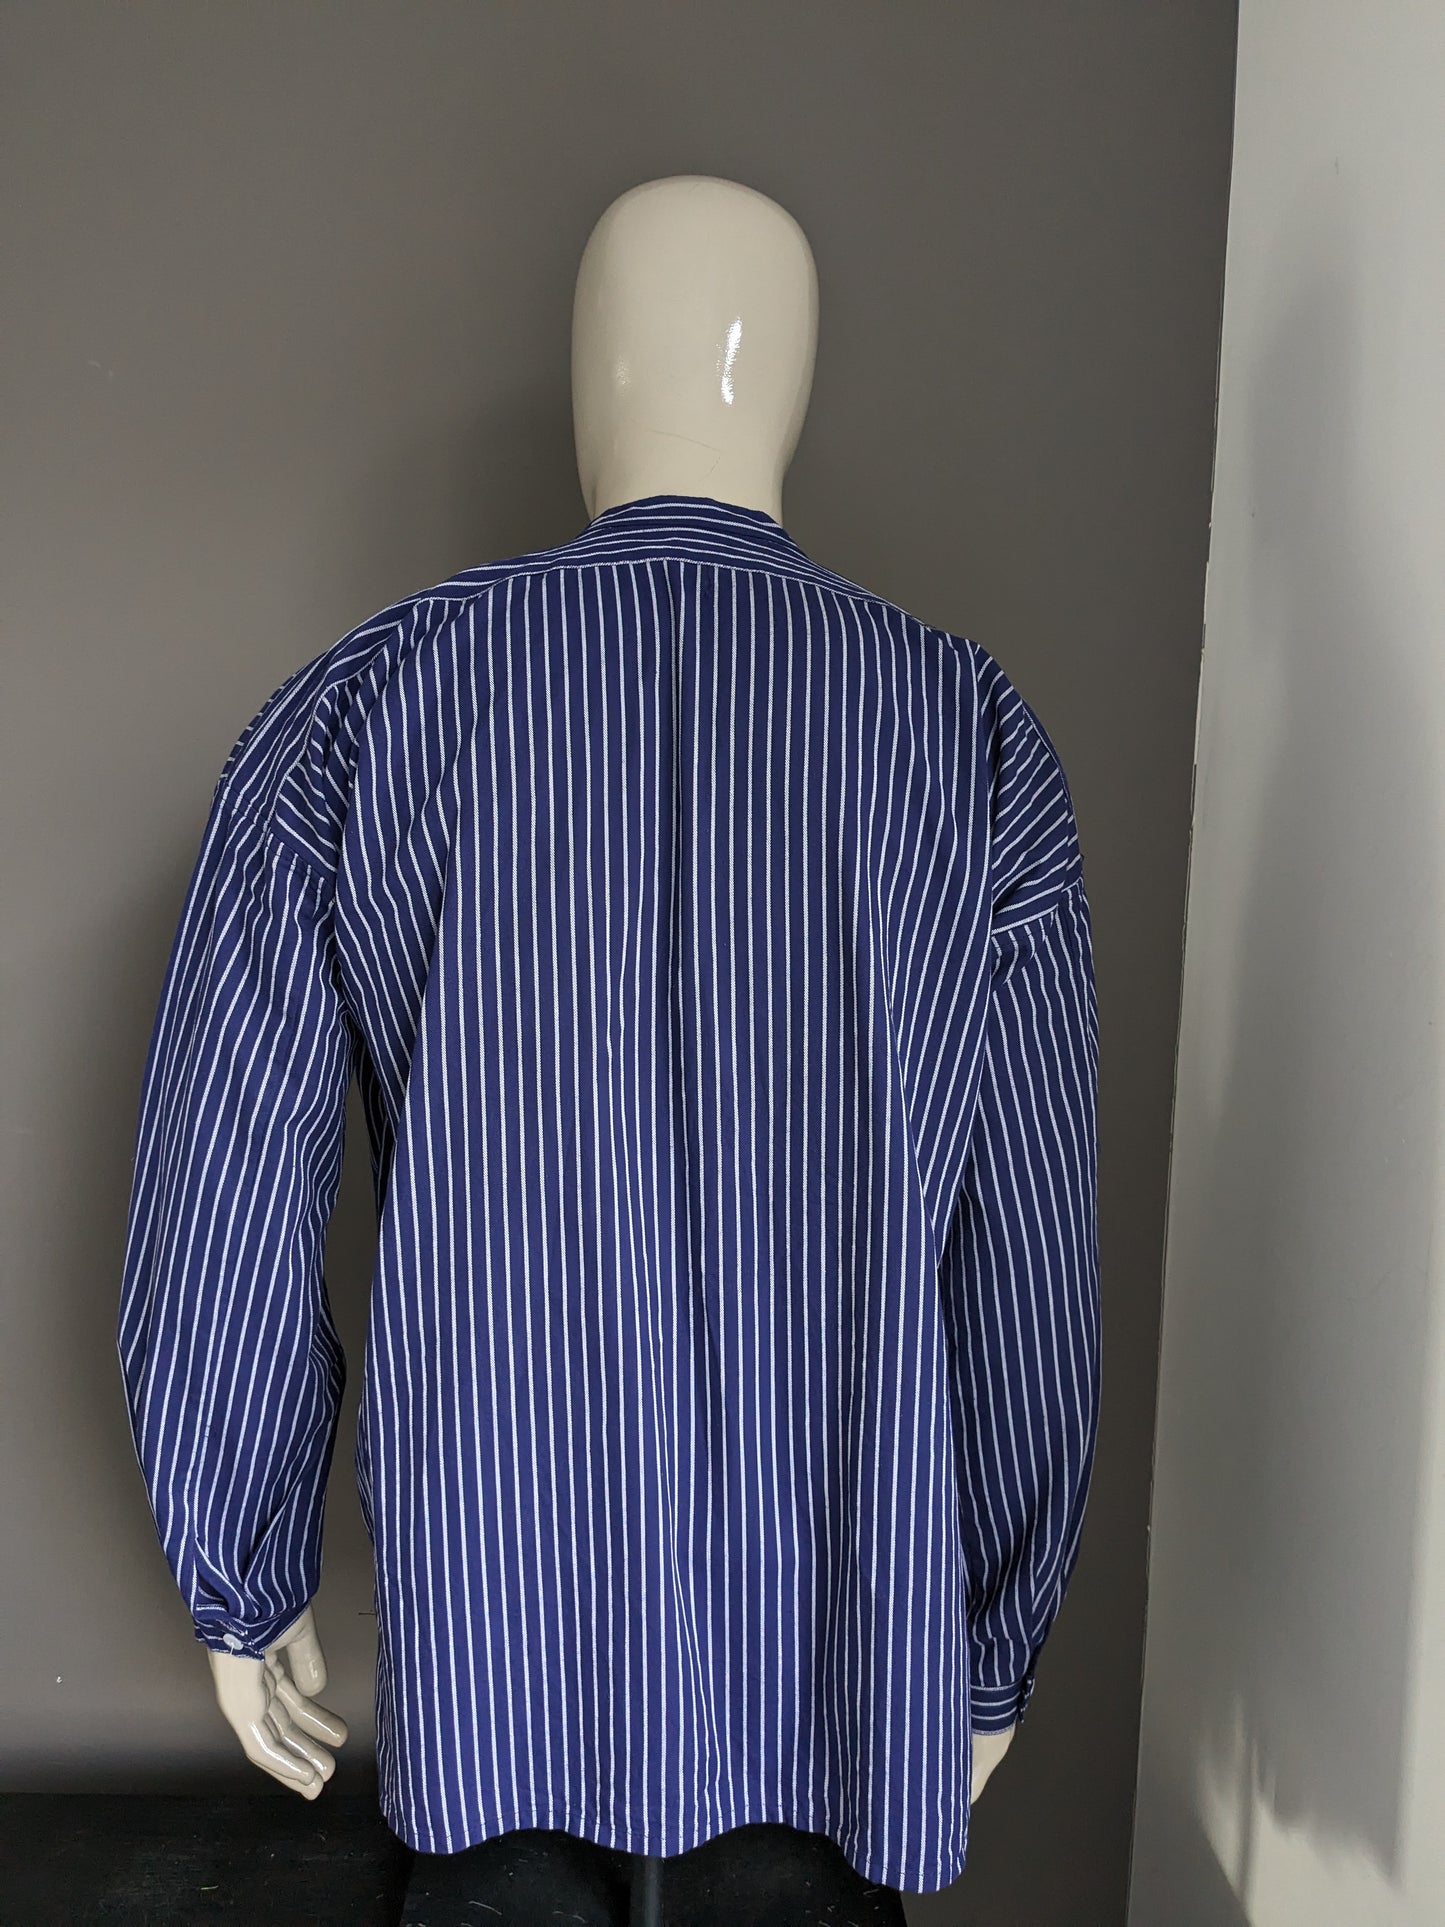 Vintage Duster polo trui / overhemd met opstaande / farmers / Mao kraag. Blauw wit gestreept. Maat XXL / 2XL